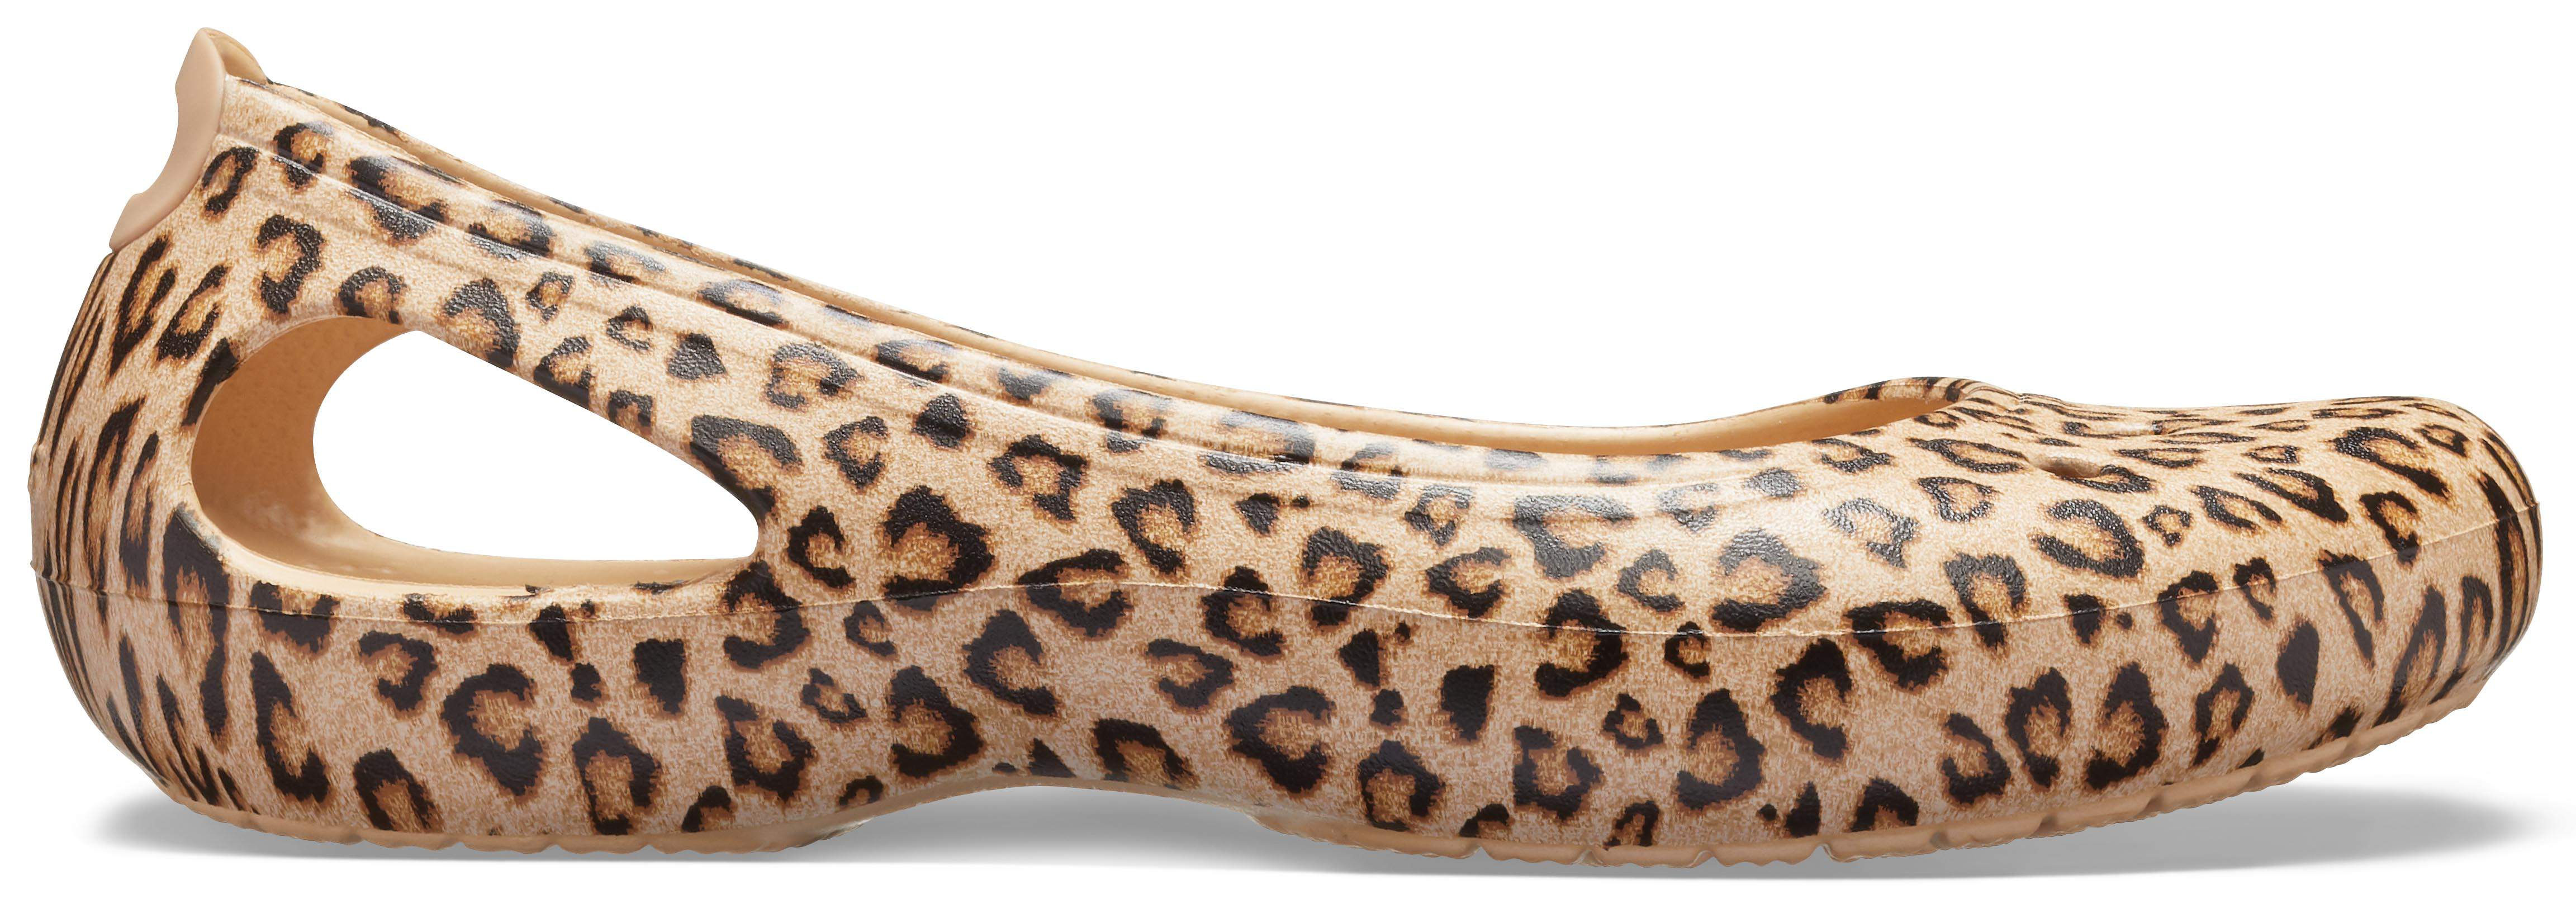 crocs leopard print kadee